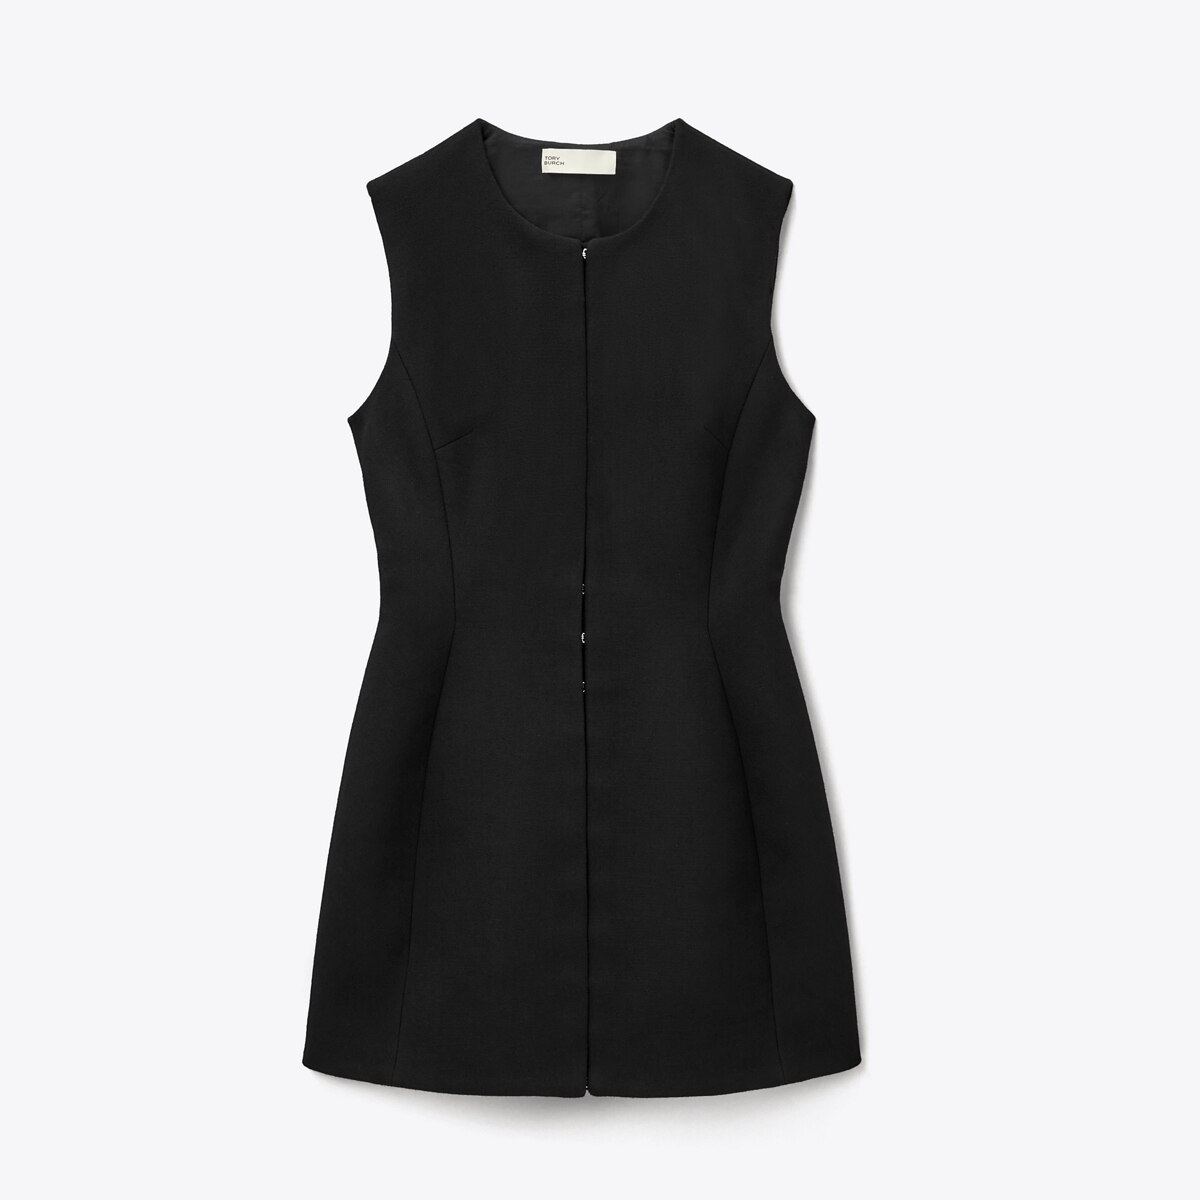 Tory Burch Wool Sleeveless Dress - Black - 4